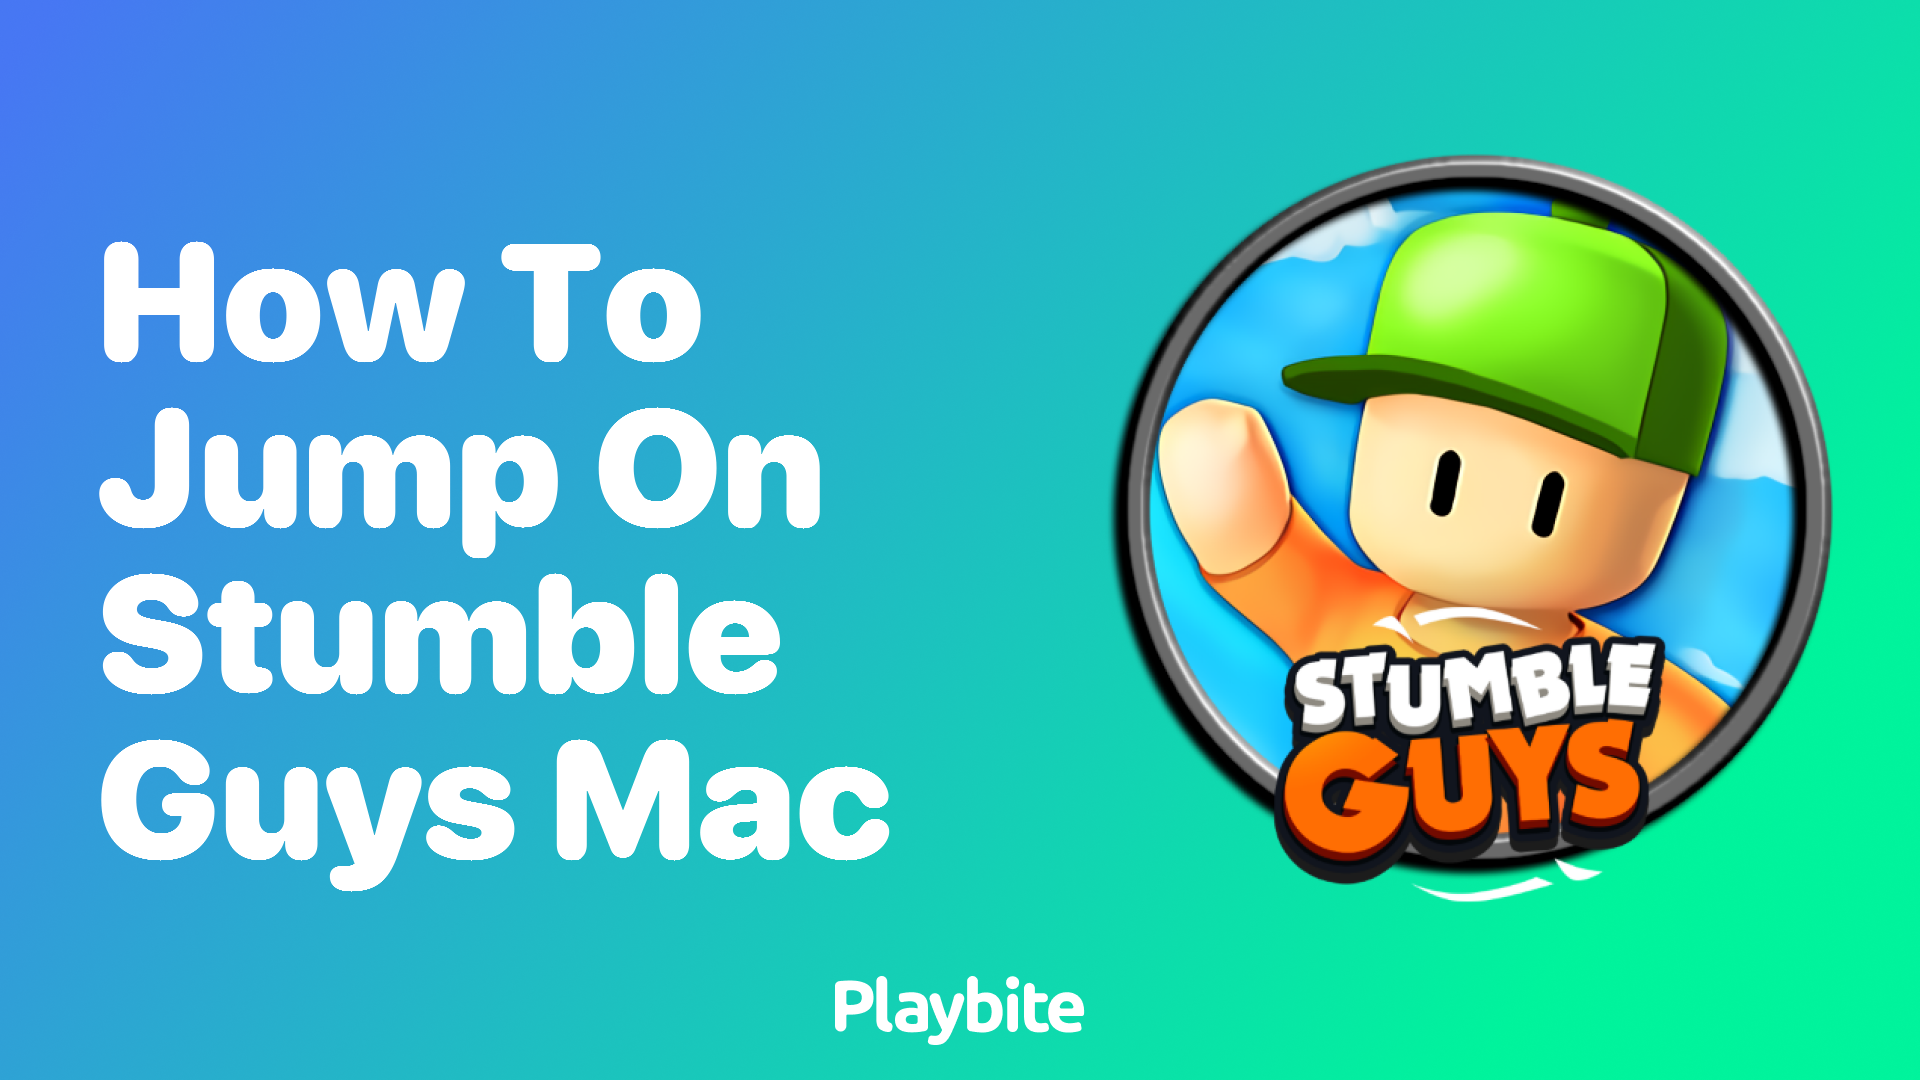 How to Jump on Stumble Guys Mac?